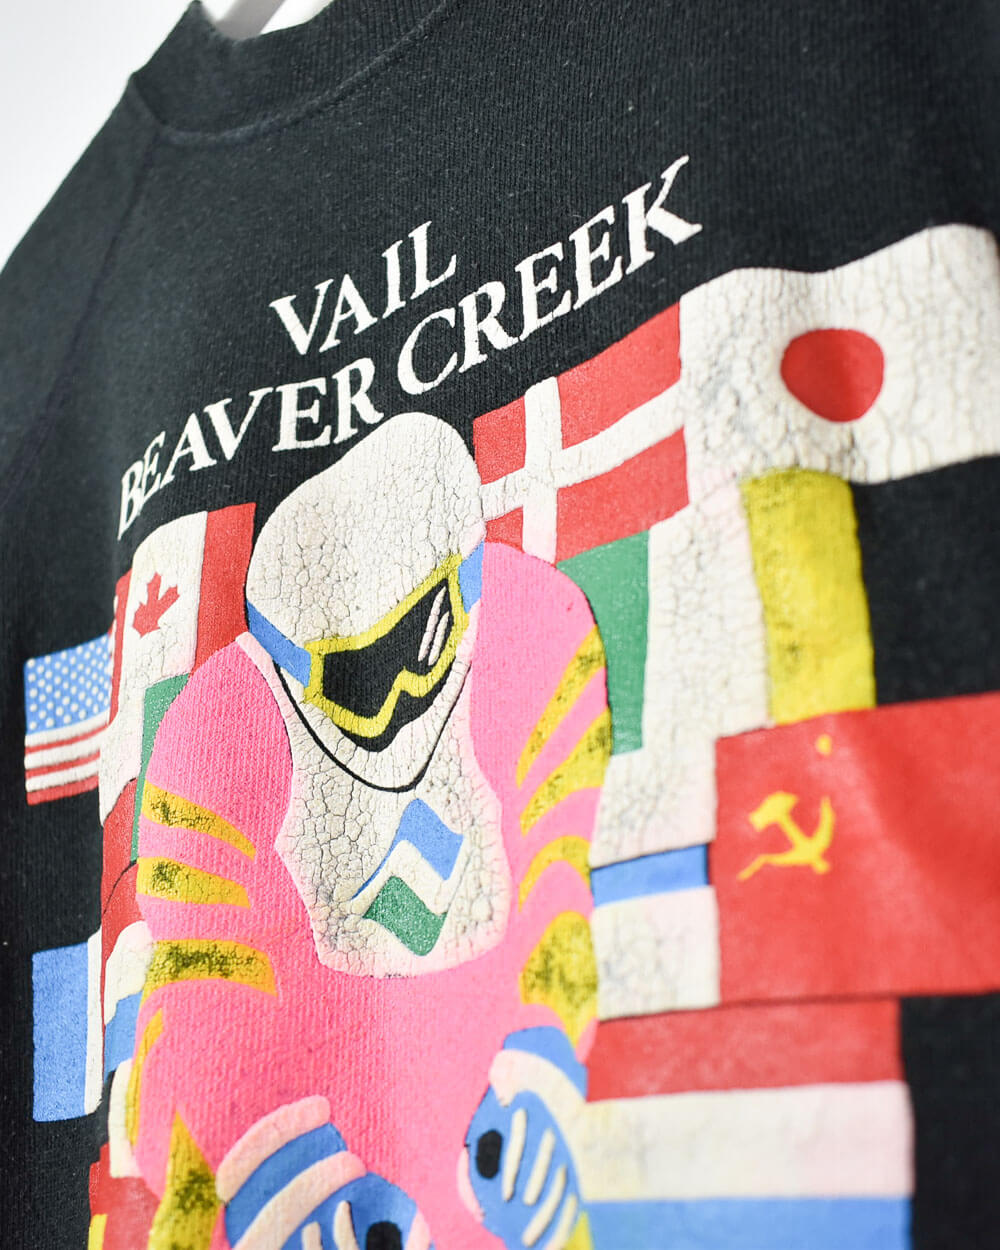 Vail Beaver Creek 1989 World Championships Sweatshirt - Small - Domno Vintage 90s, 80s, 00s Retro and Vintage Clothing 